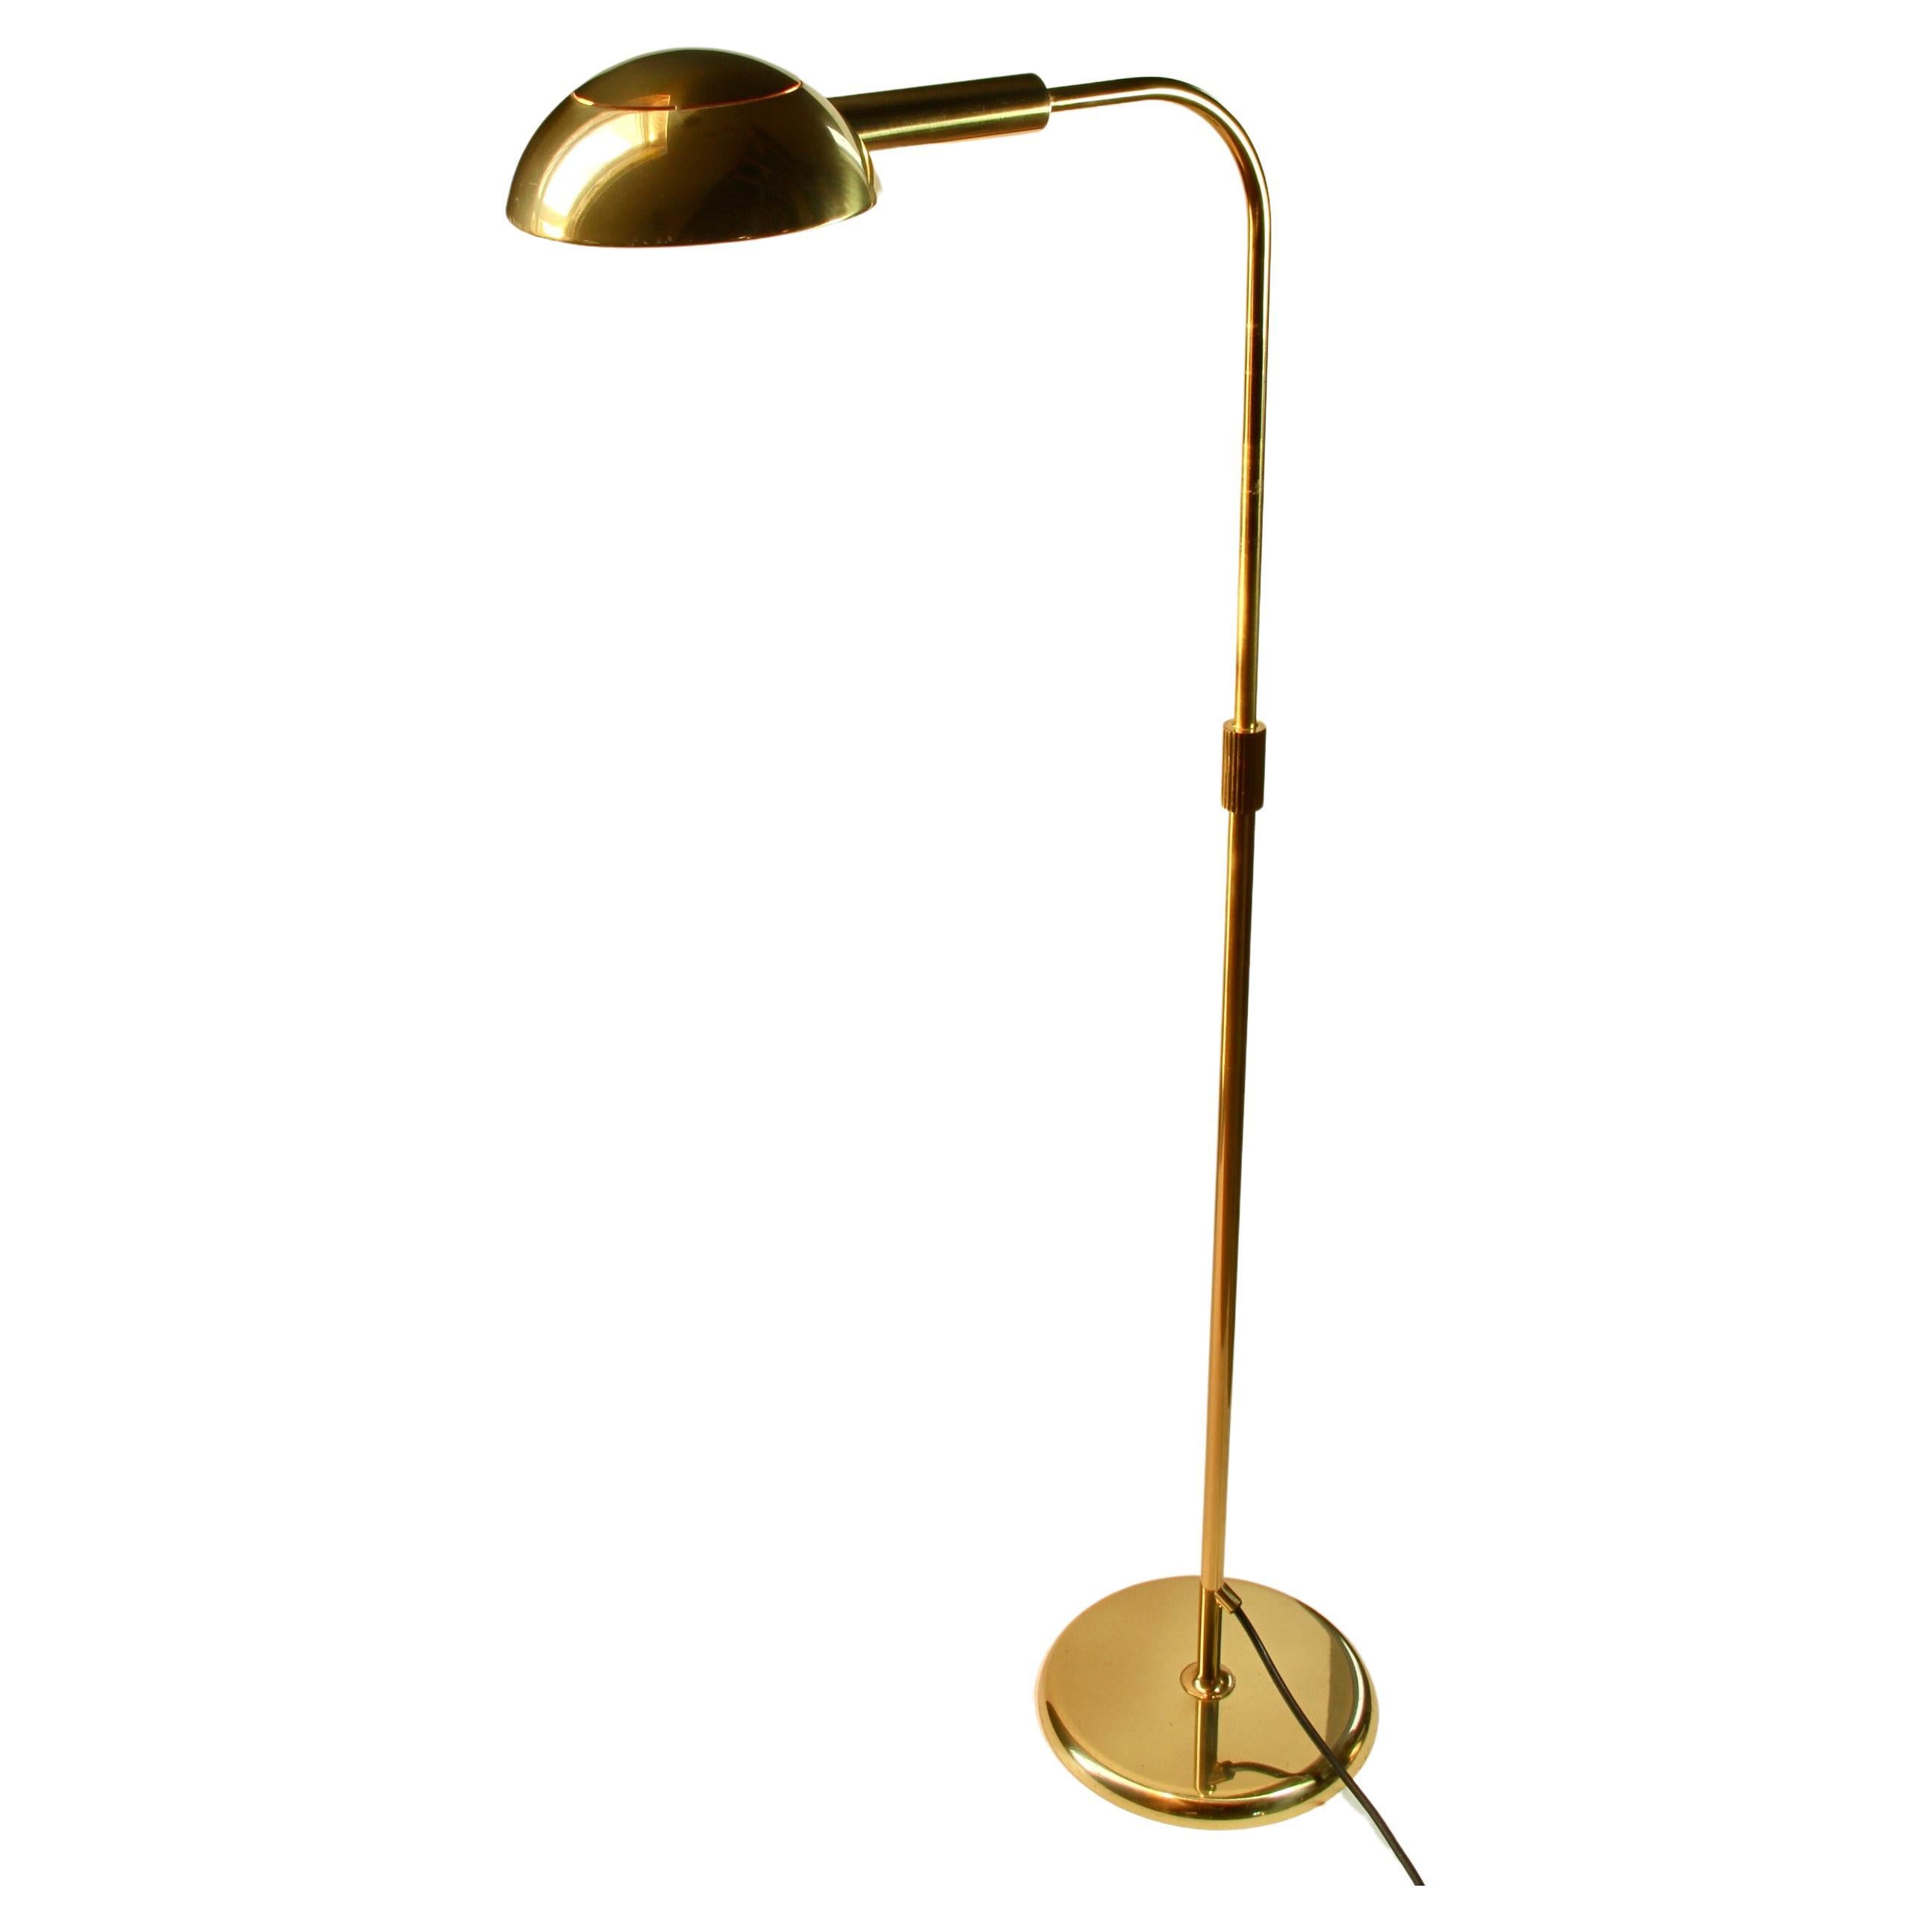 German Florian Schulz Mid-Century Vintage Modernist Brass 1970s Dimmable Floor Lamp